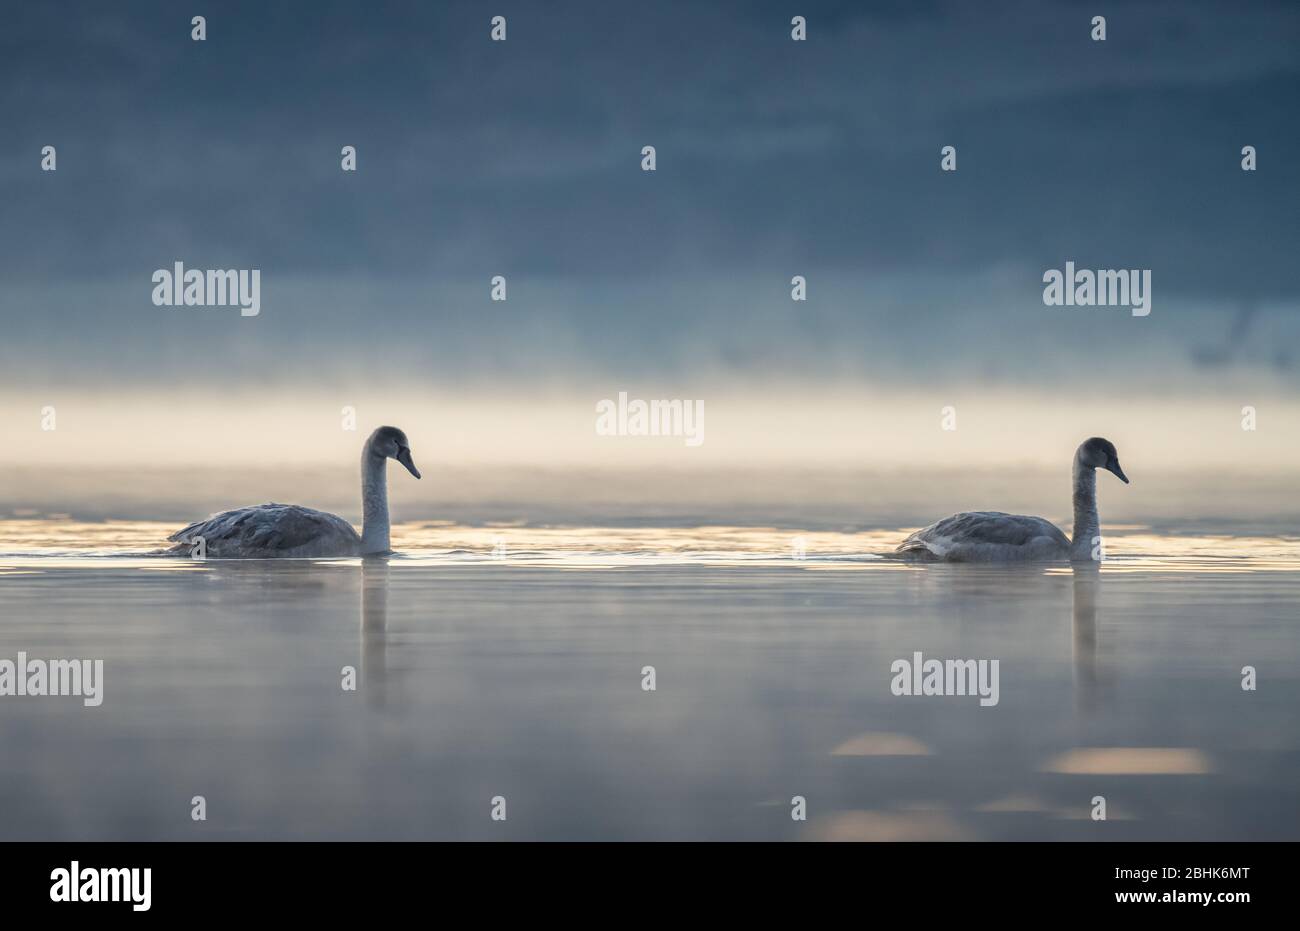 Whooper swans (Cygnus cygnus) swimming through mist on a calm lake at sunrise. Stock Photo